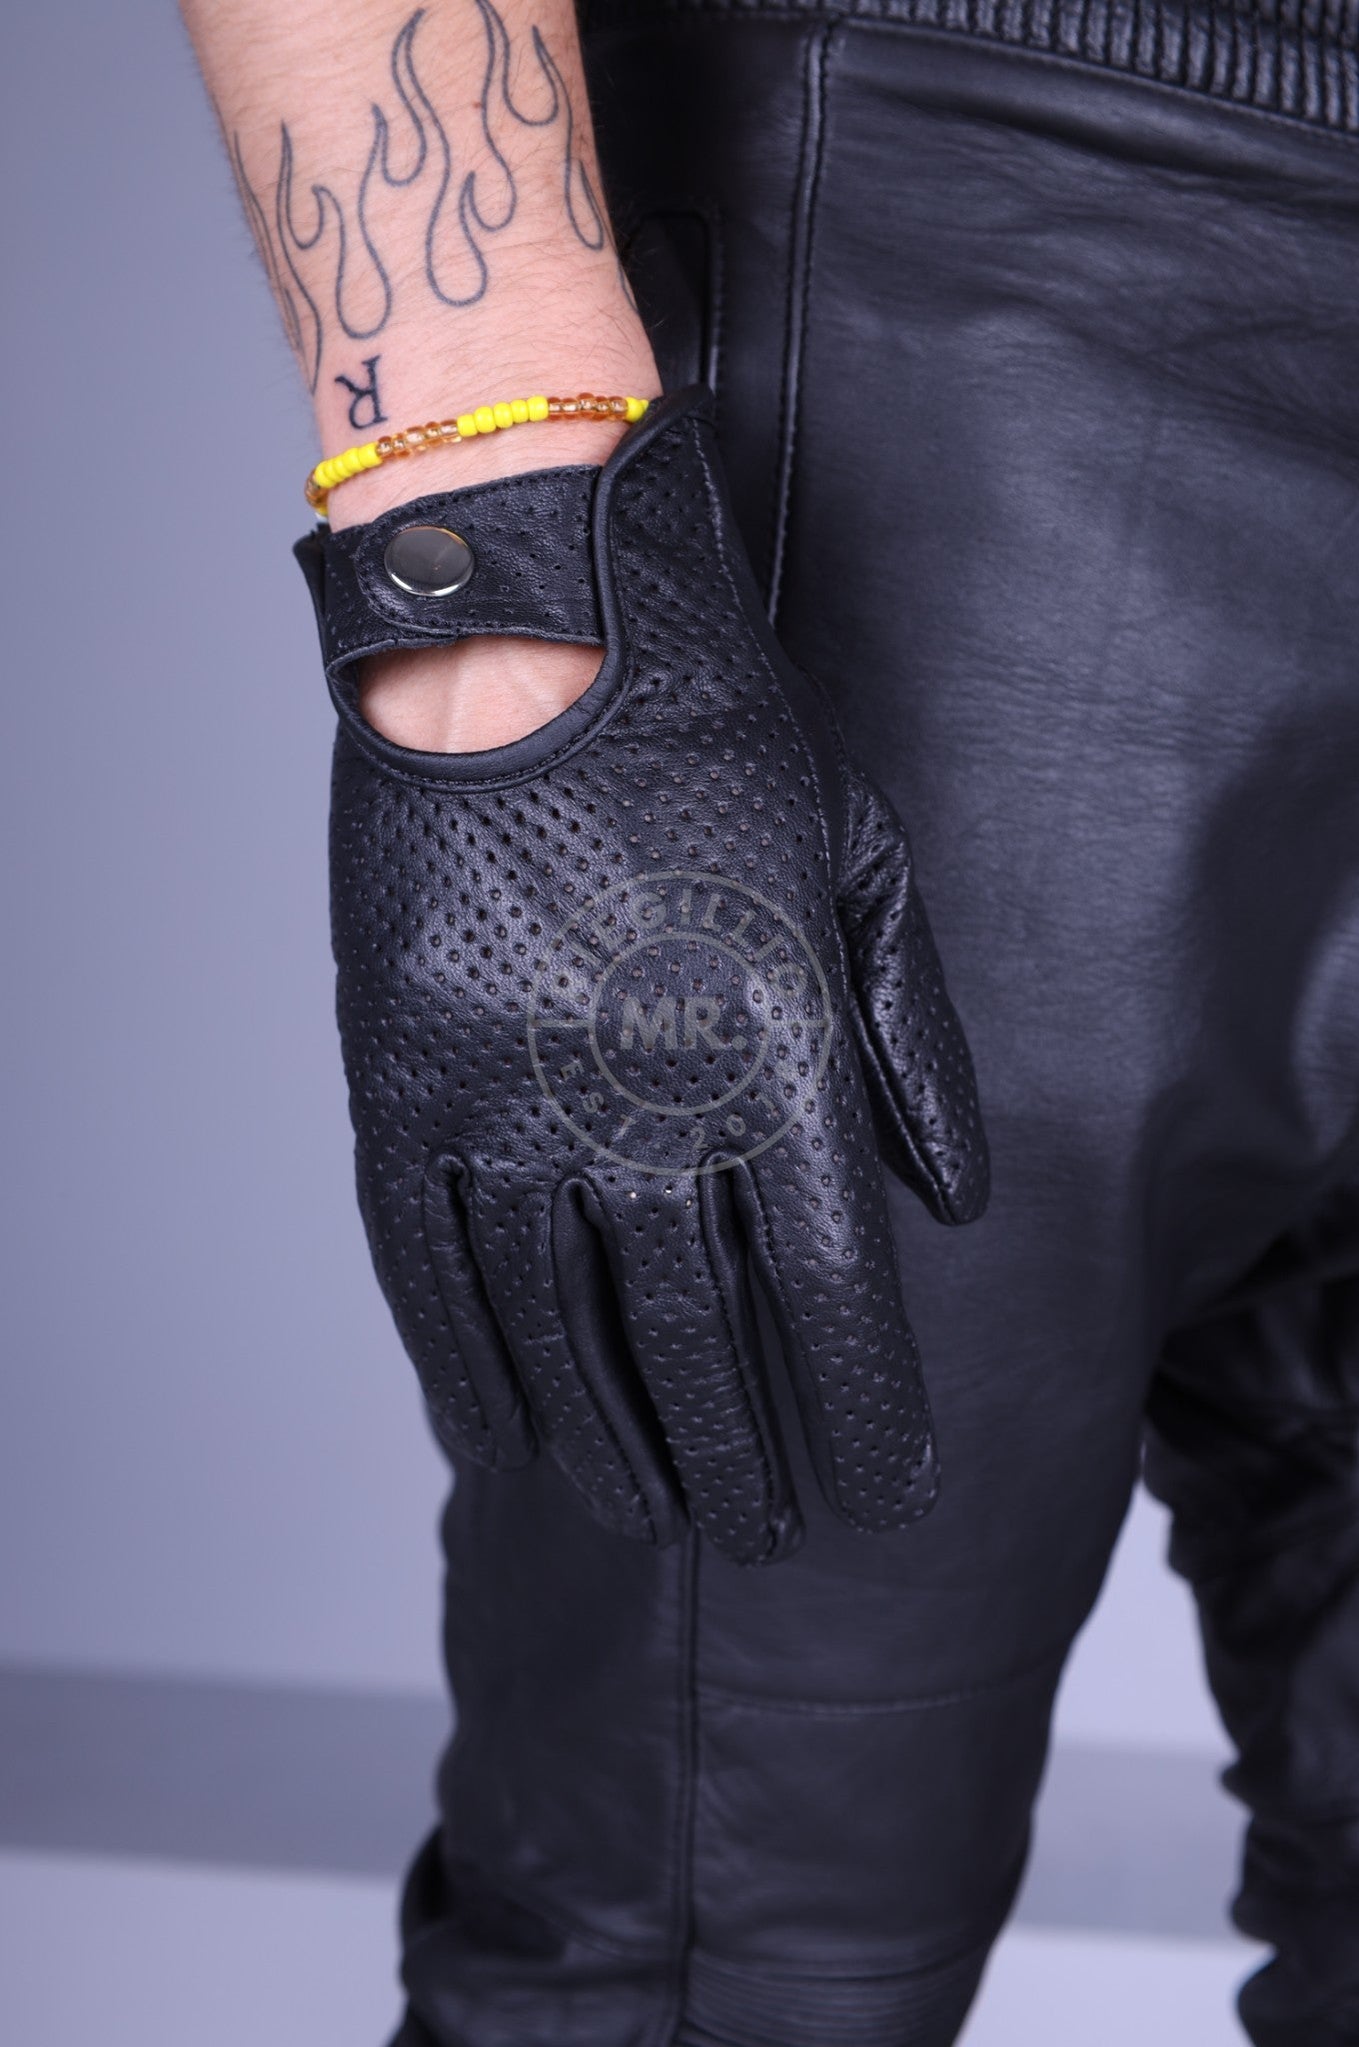 Leather Racing Gloves - Black at MR. Riegillio